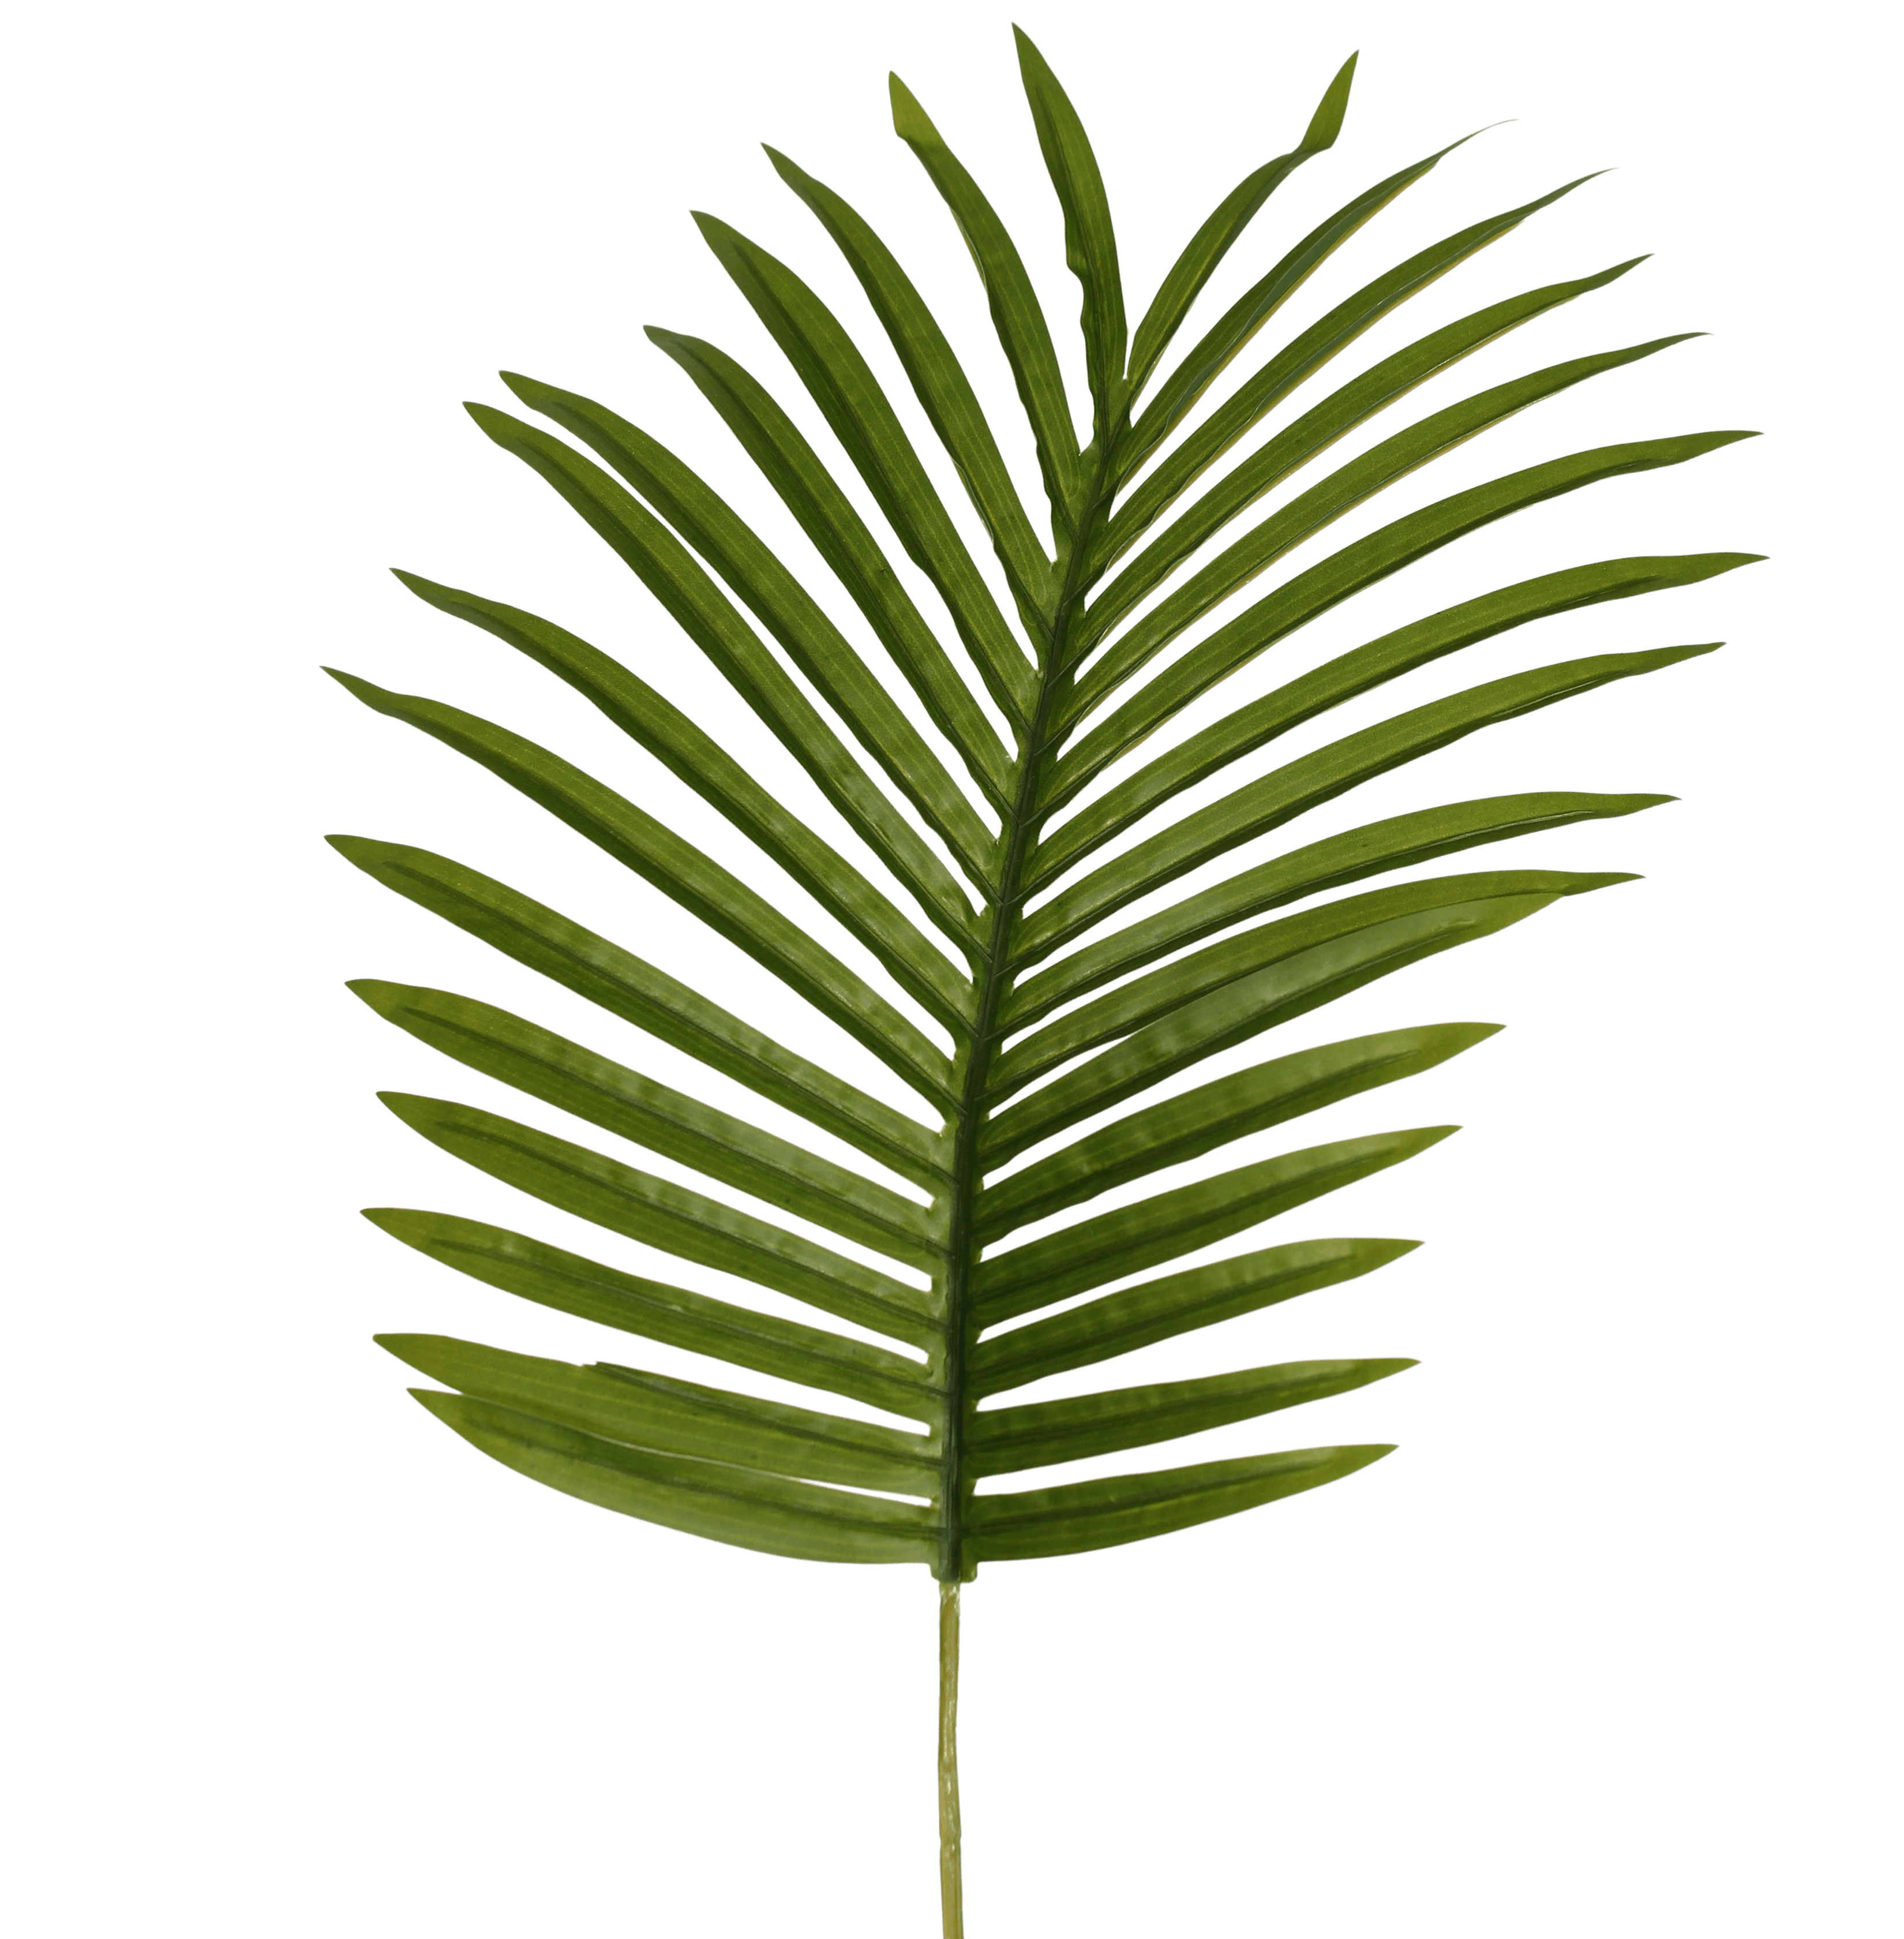 Articial paradise leaf